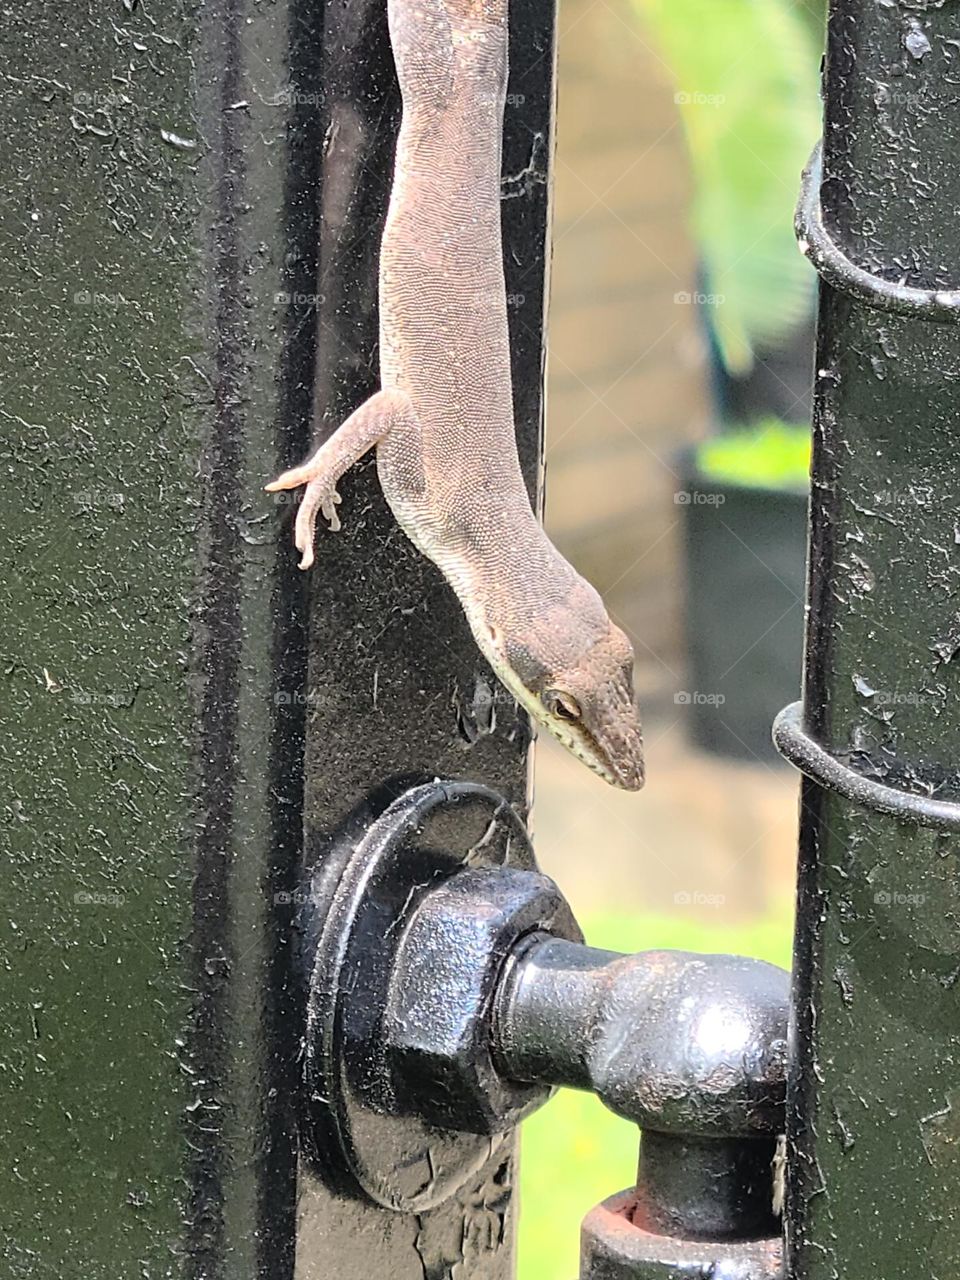 Lizard on a gate